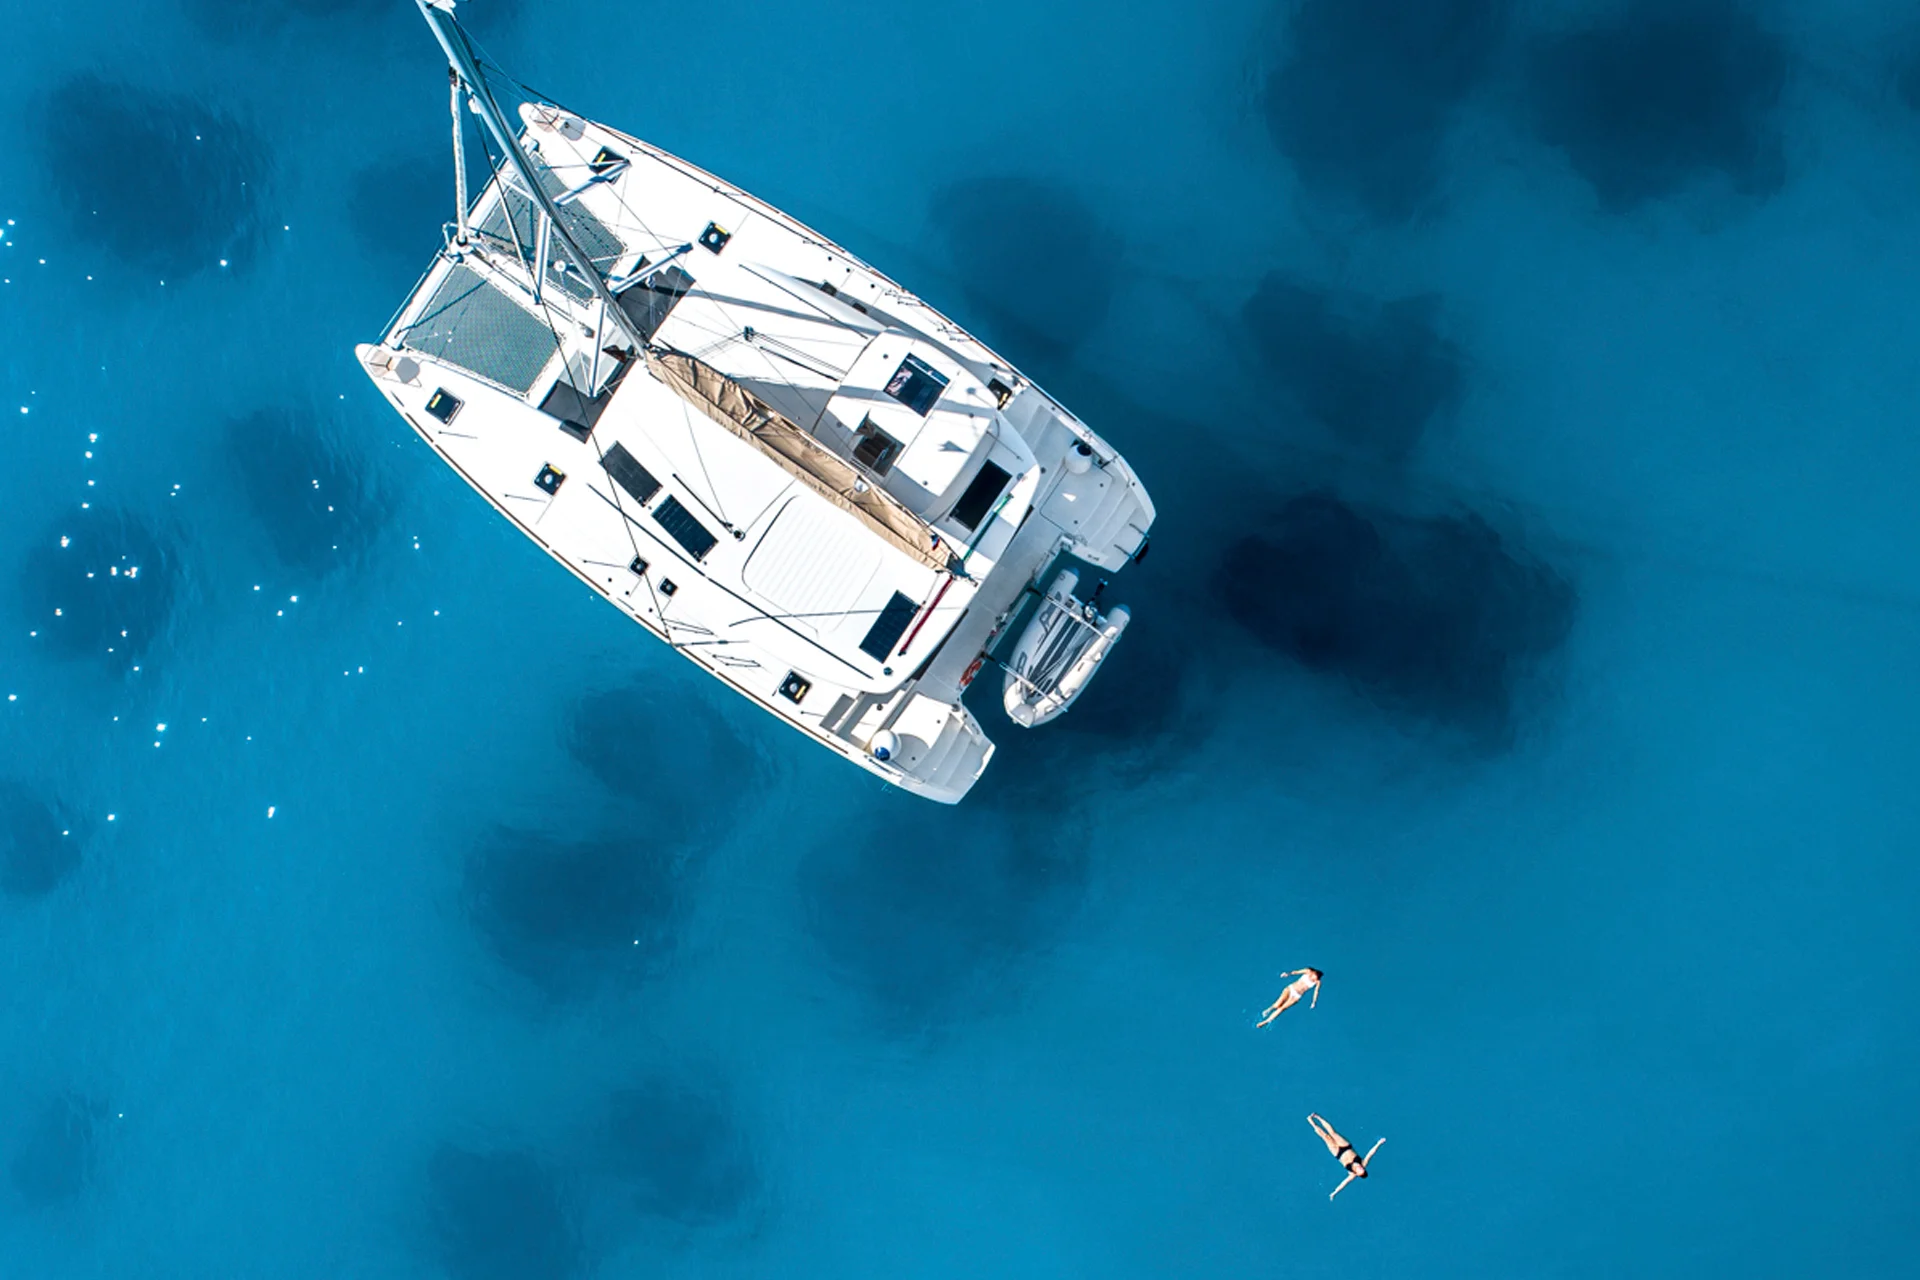 Greece catamaran yacht on blue sea